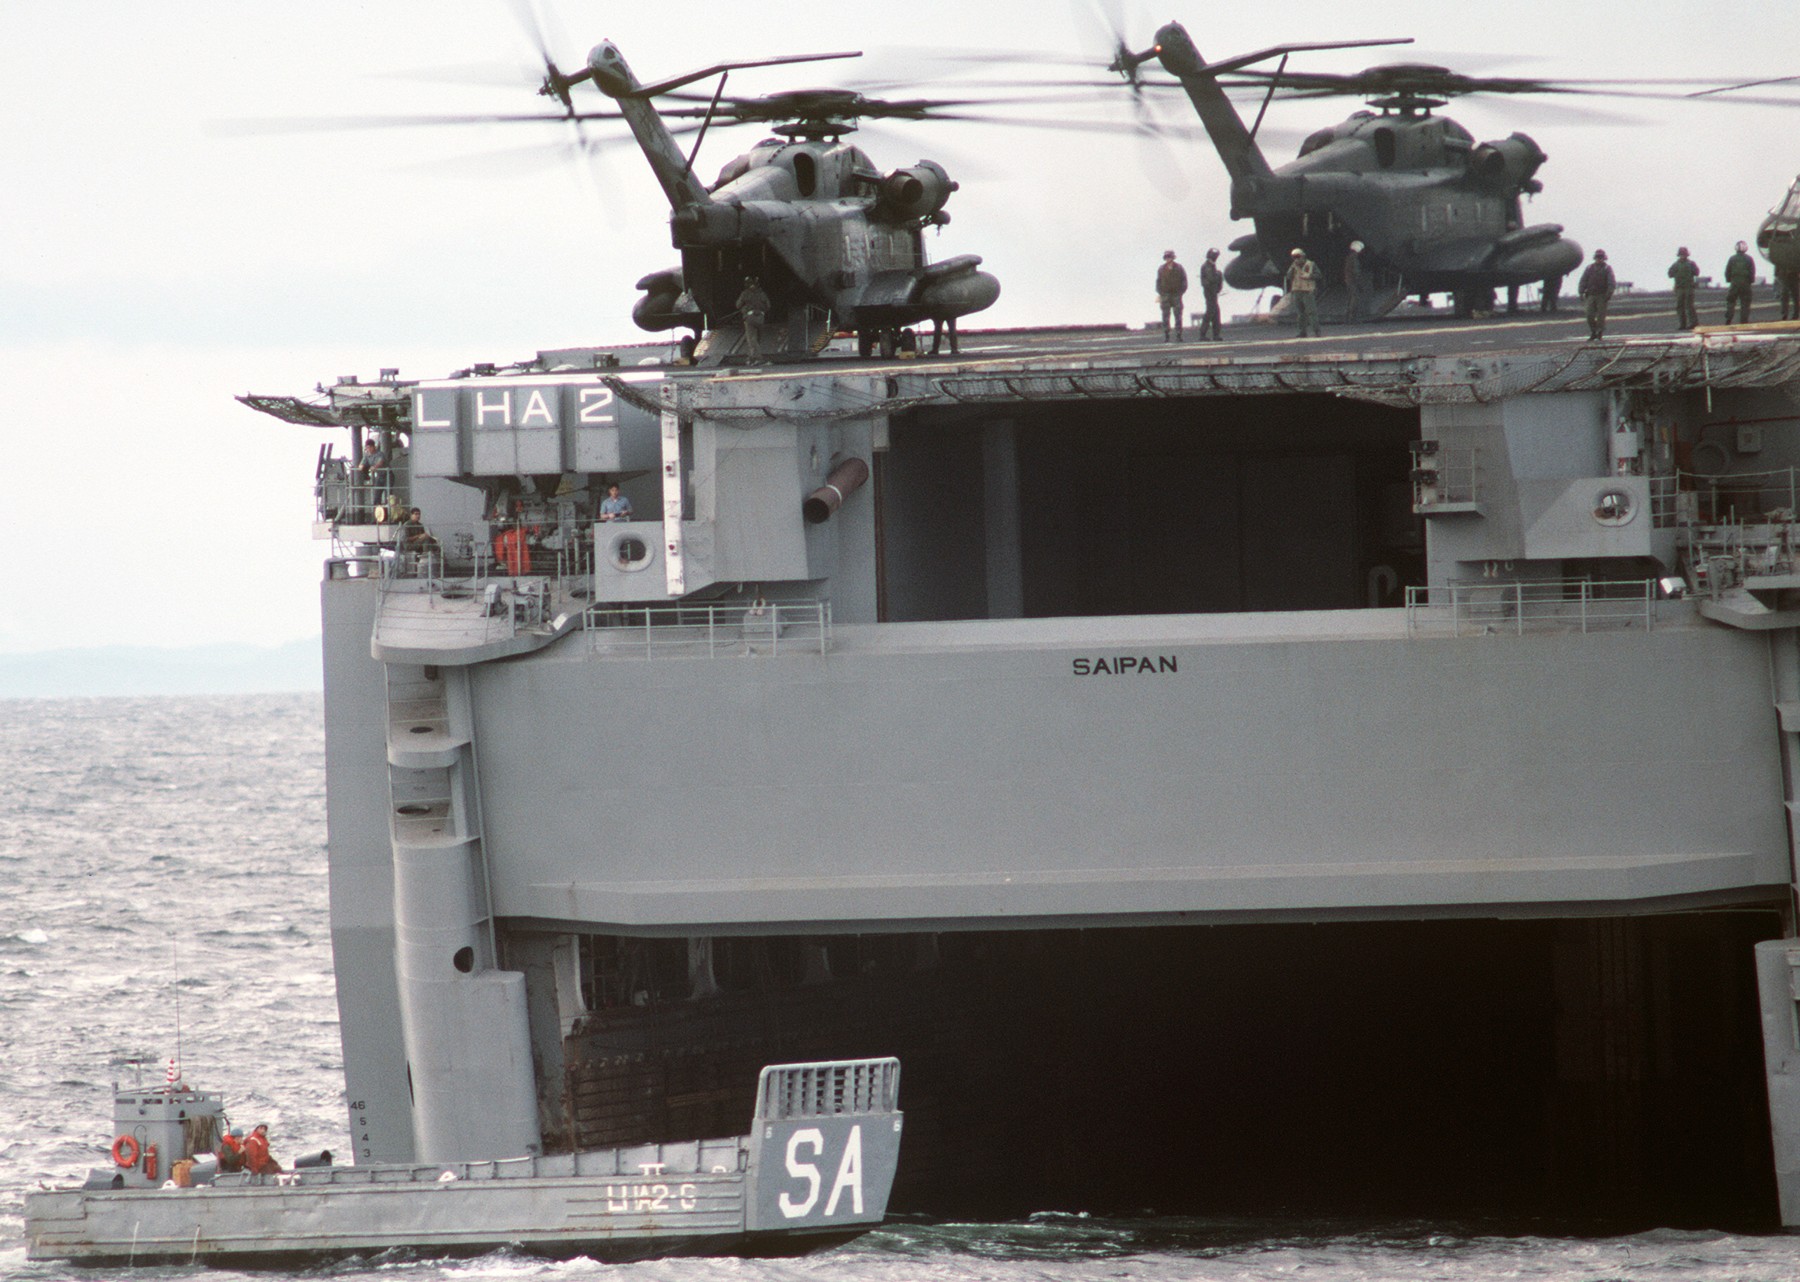 lha-2 uss saipan tarawa class amphibious assault ship us navy 22nd mau hmm-162 usmc nato exercise northern wedding 54